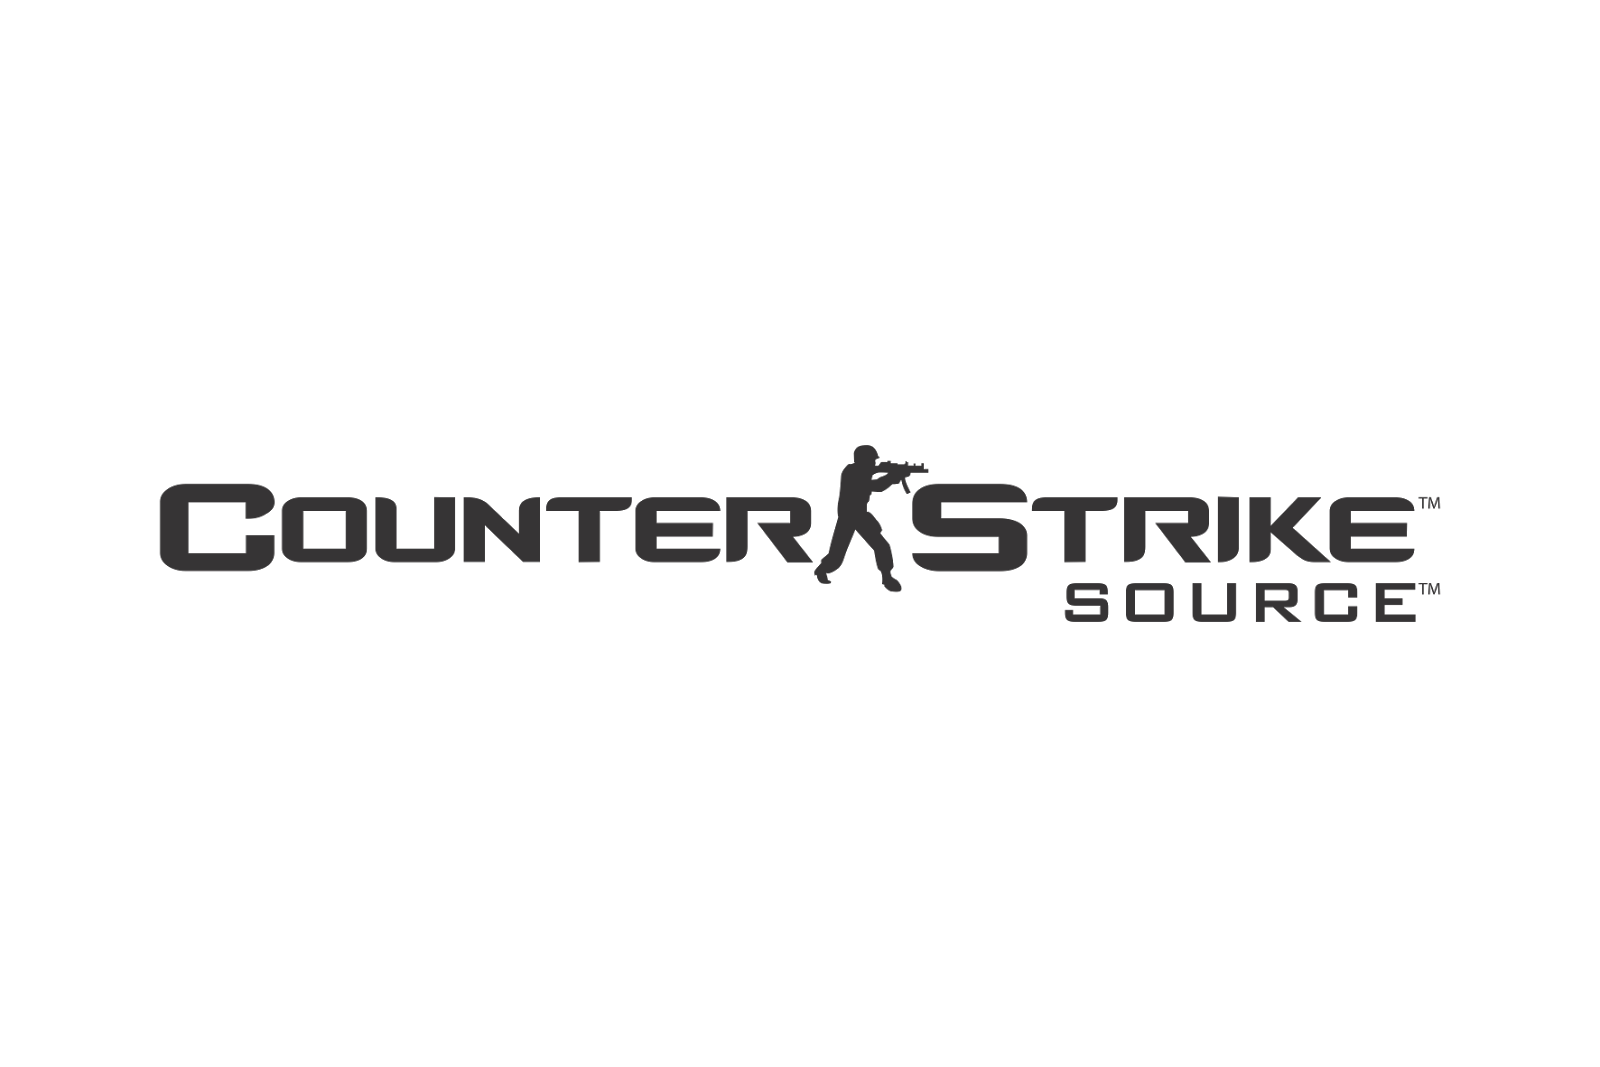 Страйк слово. Counter Strike логотип. Counter Strike source лого. Контр страйк соурс логотип. Counter Strike 1.6 логотип.